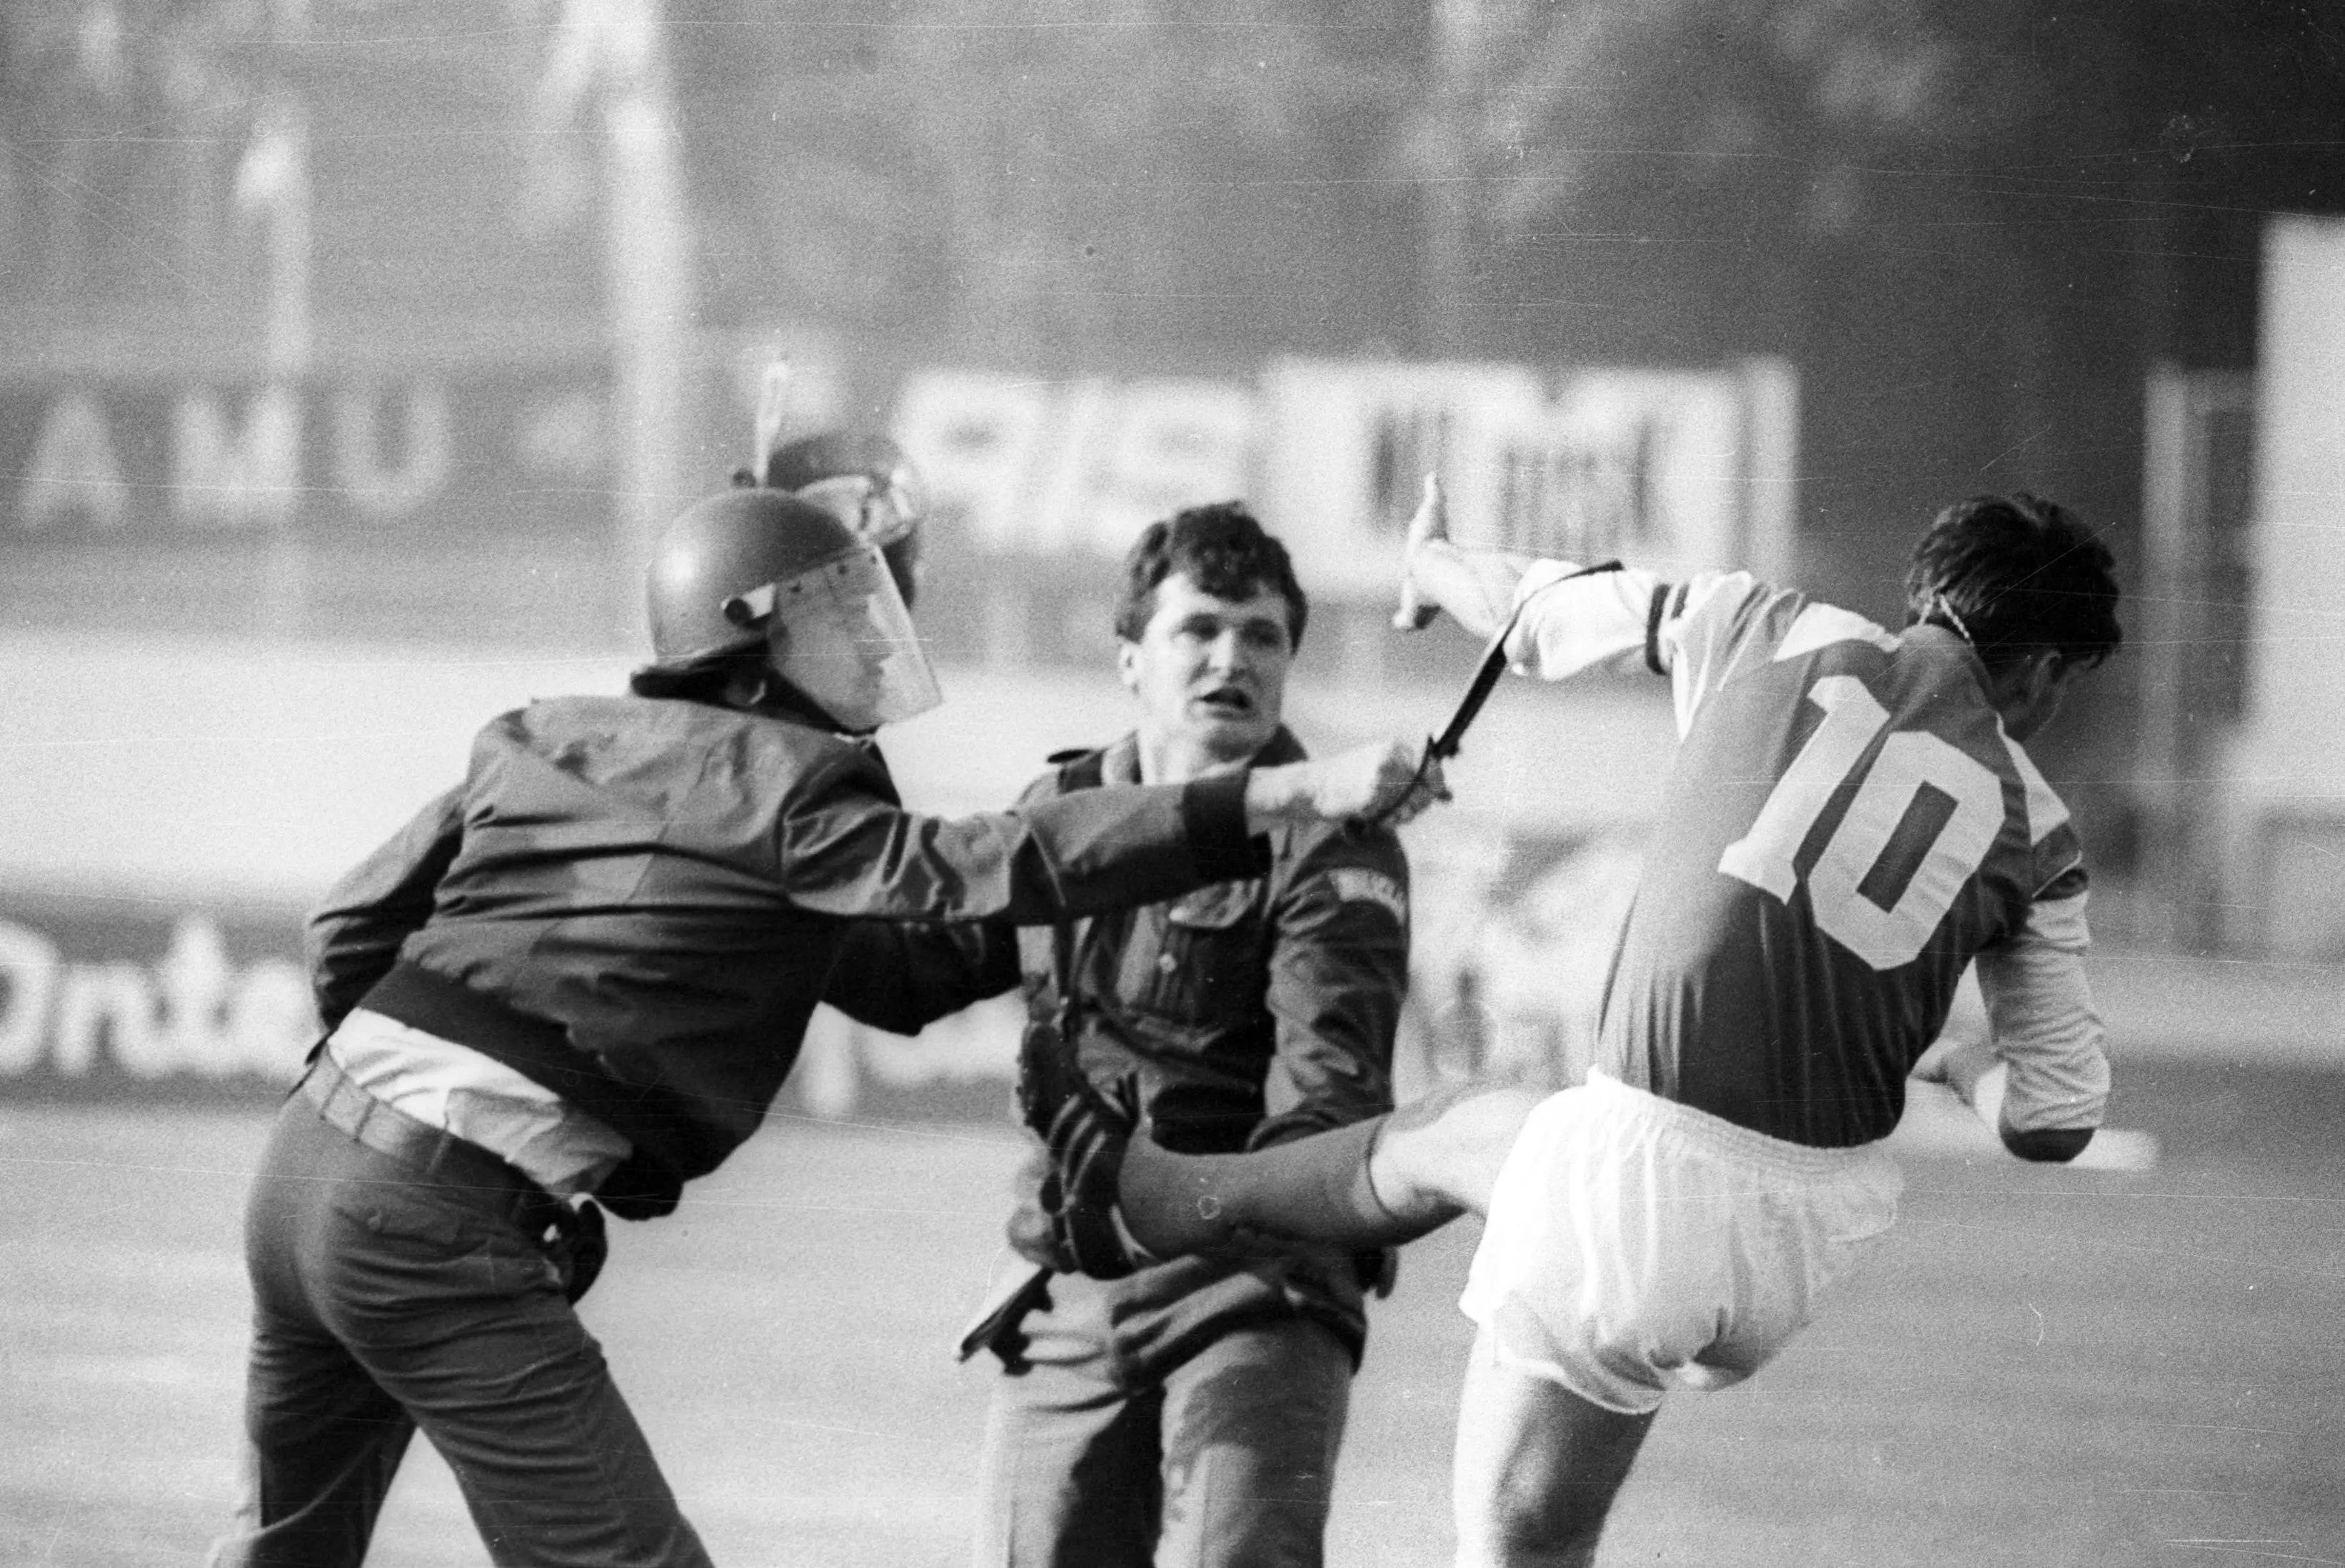 1990 Dinamo Zagreb Red Star Belgrade Riot The Football War, By Ultrashun